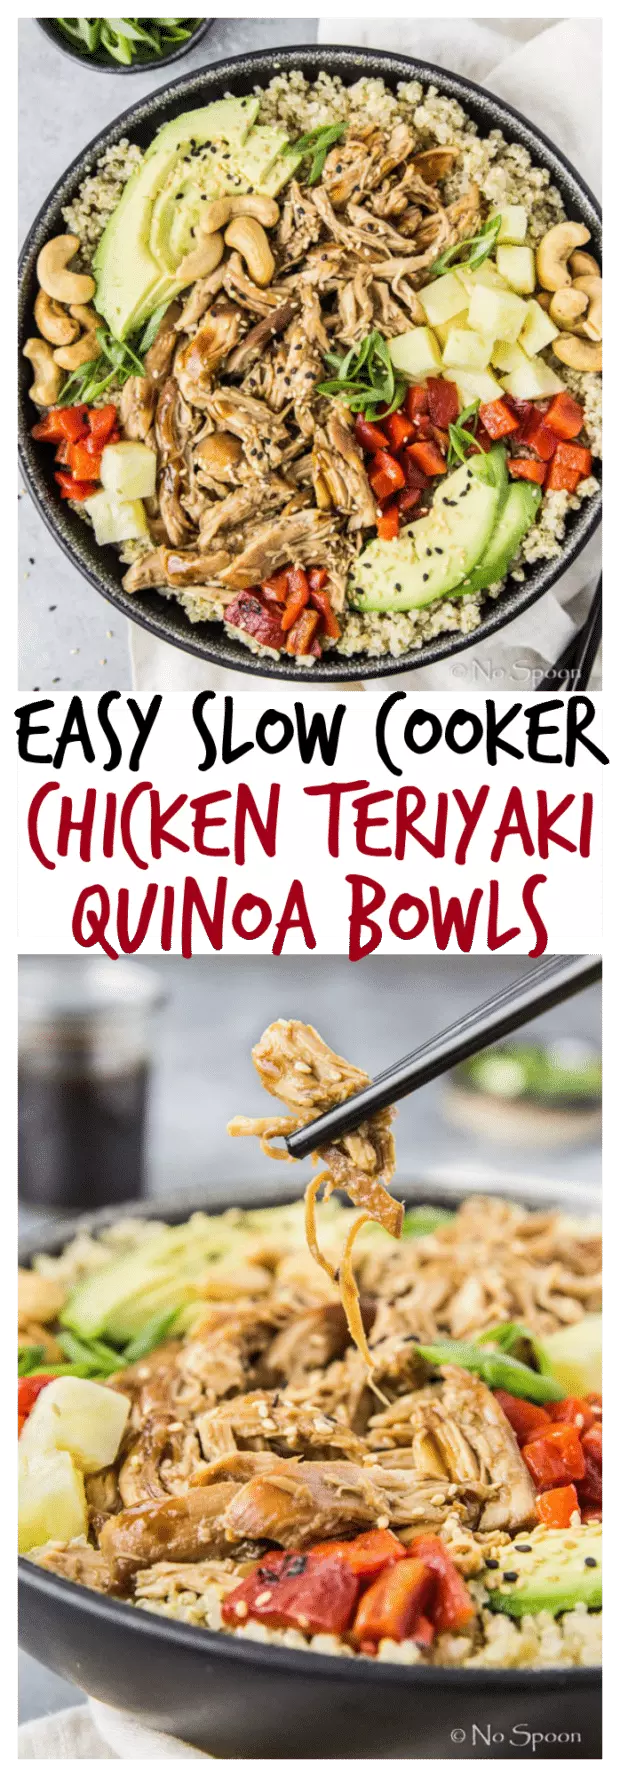 easy-slow-cooker-chicken-teriyaki-quinoa-bowls-long-pin1